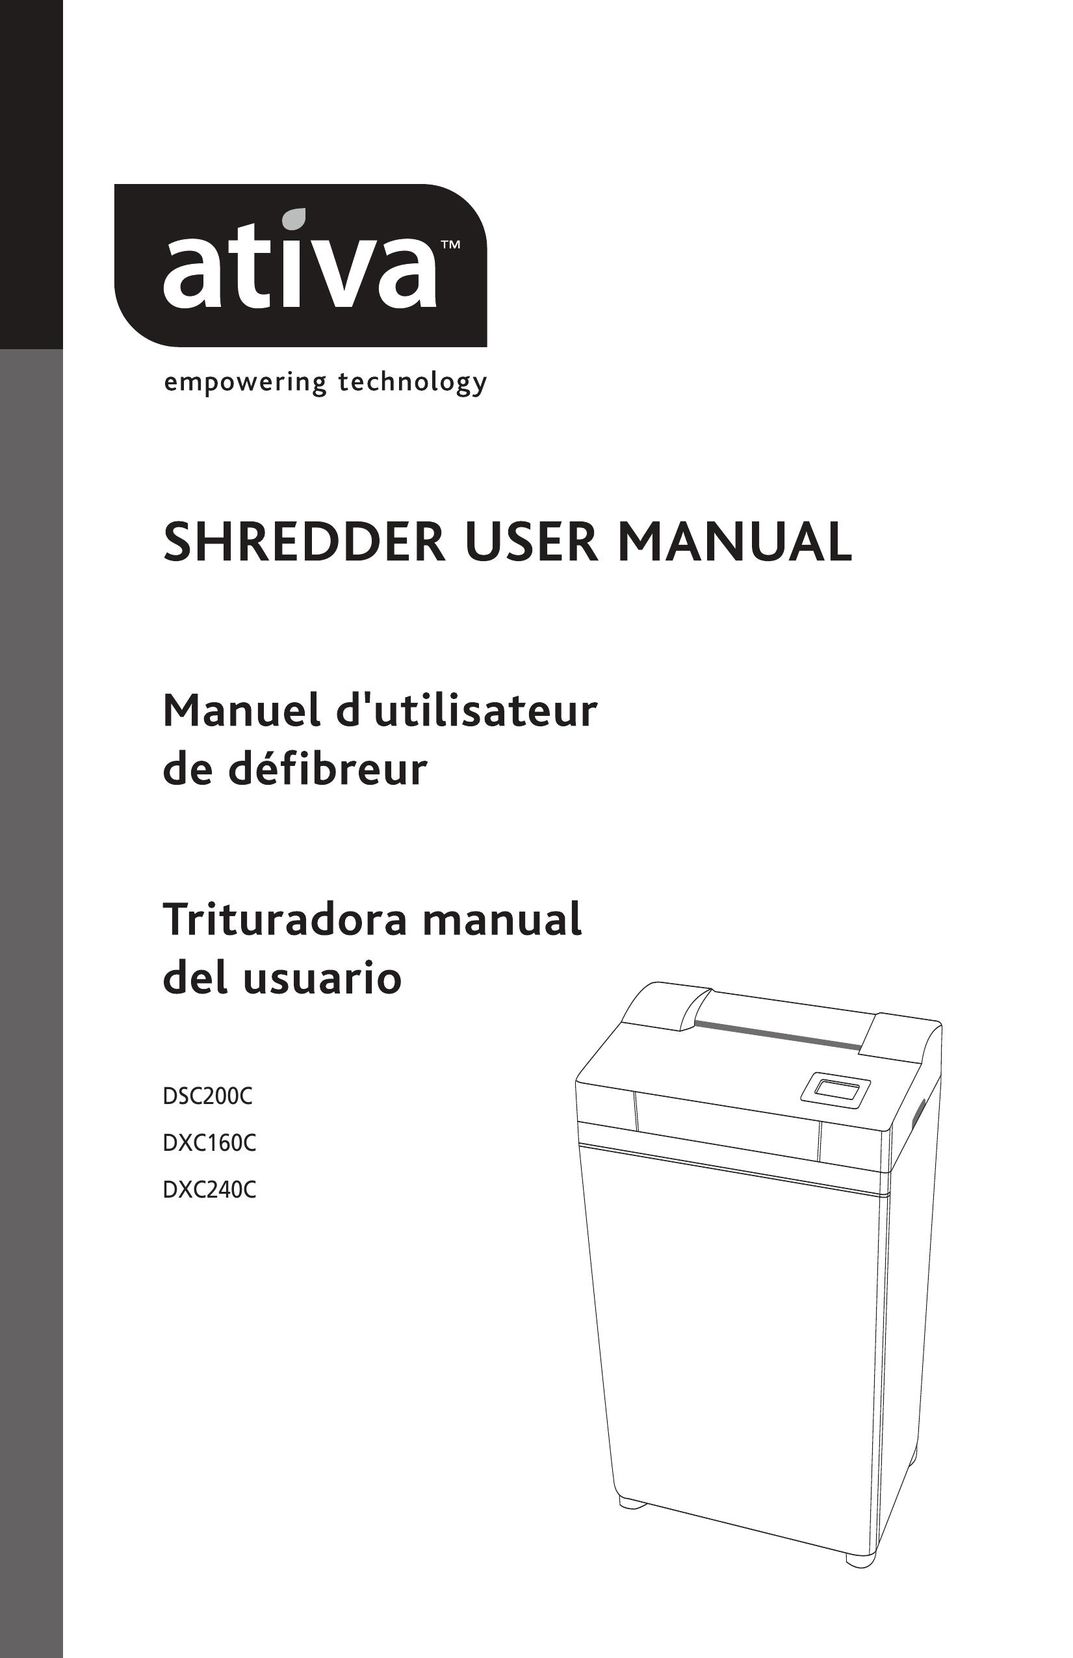 Ativa DXC160C Paper Shredder User Manual